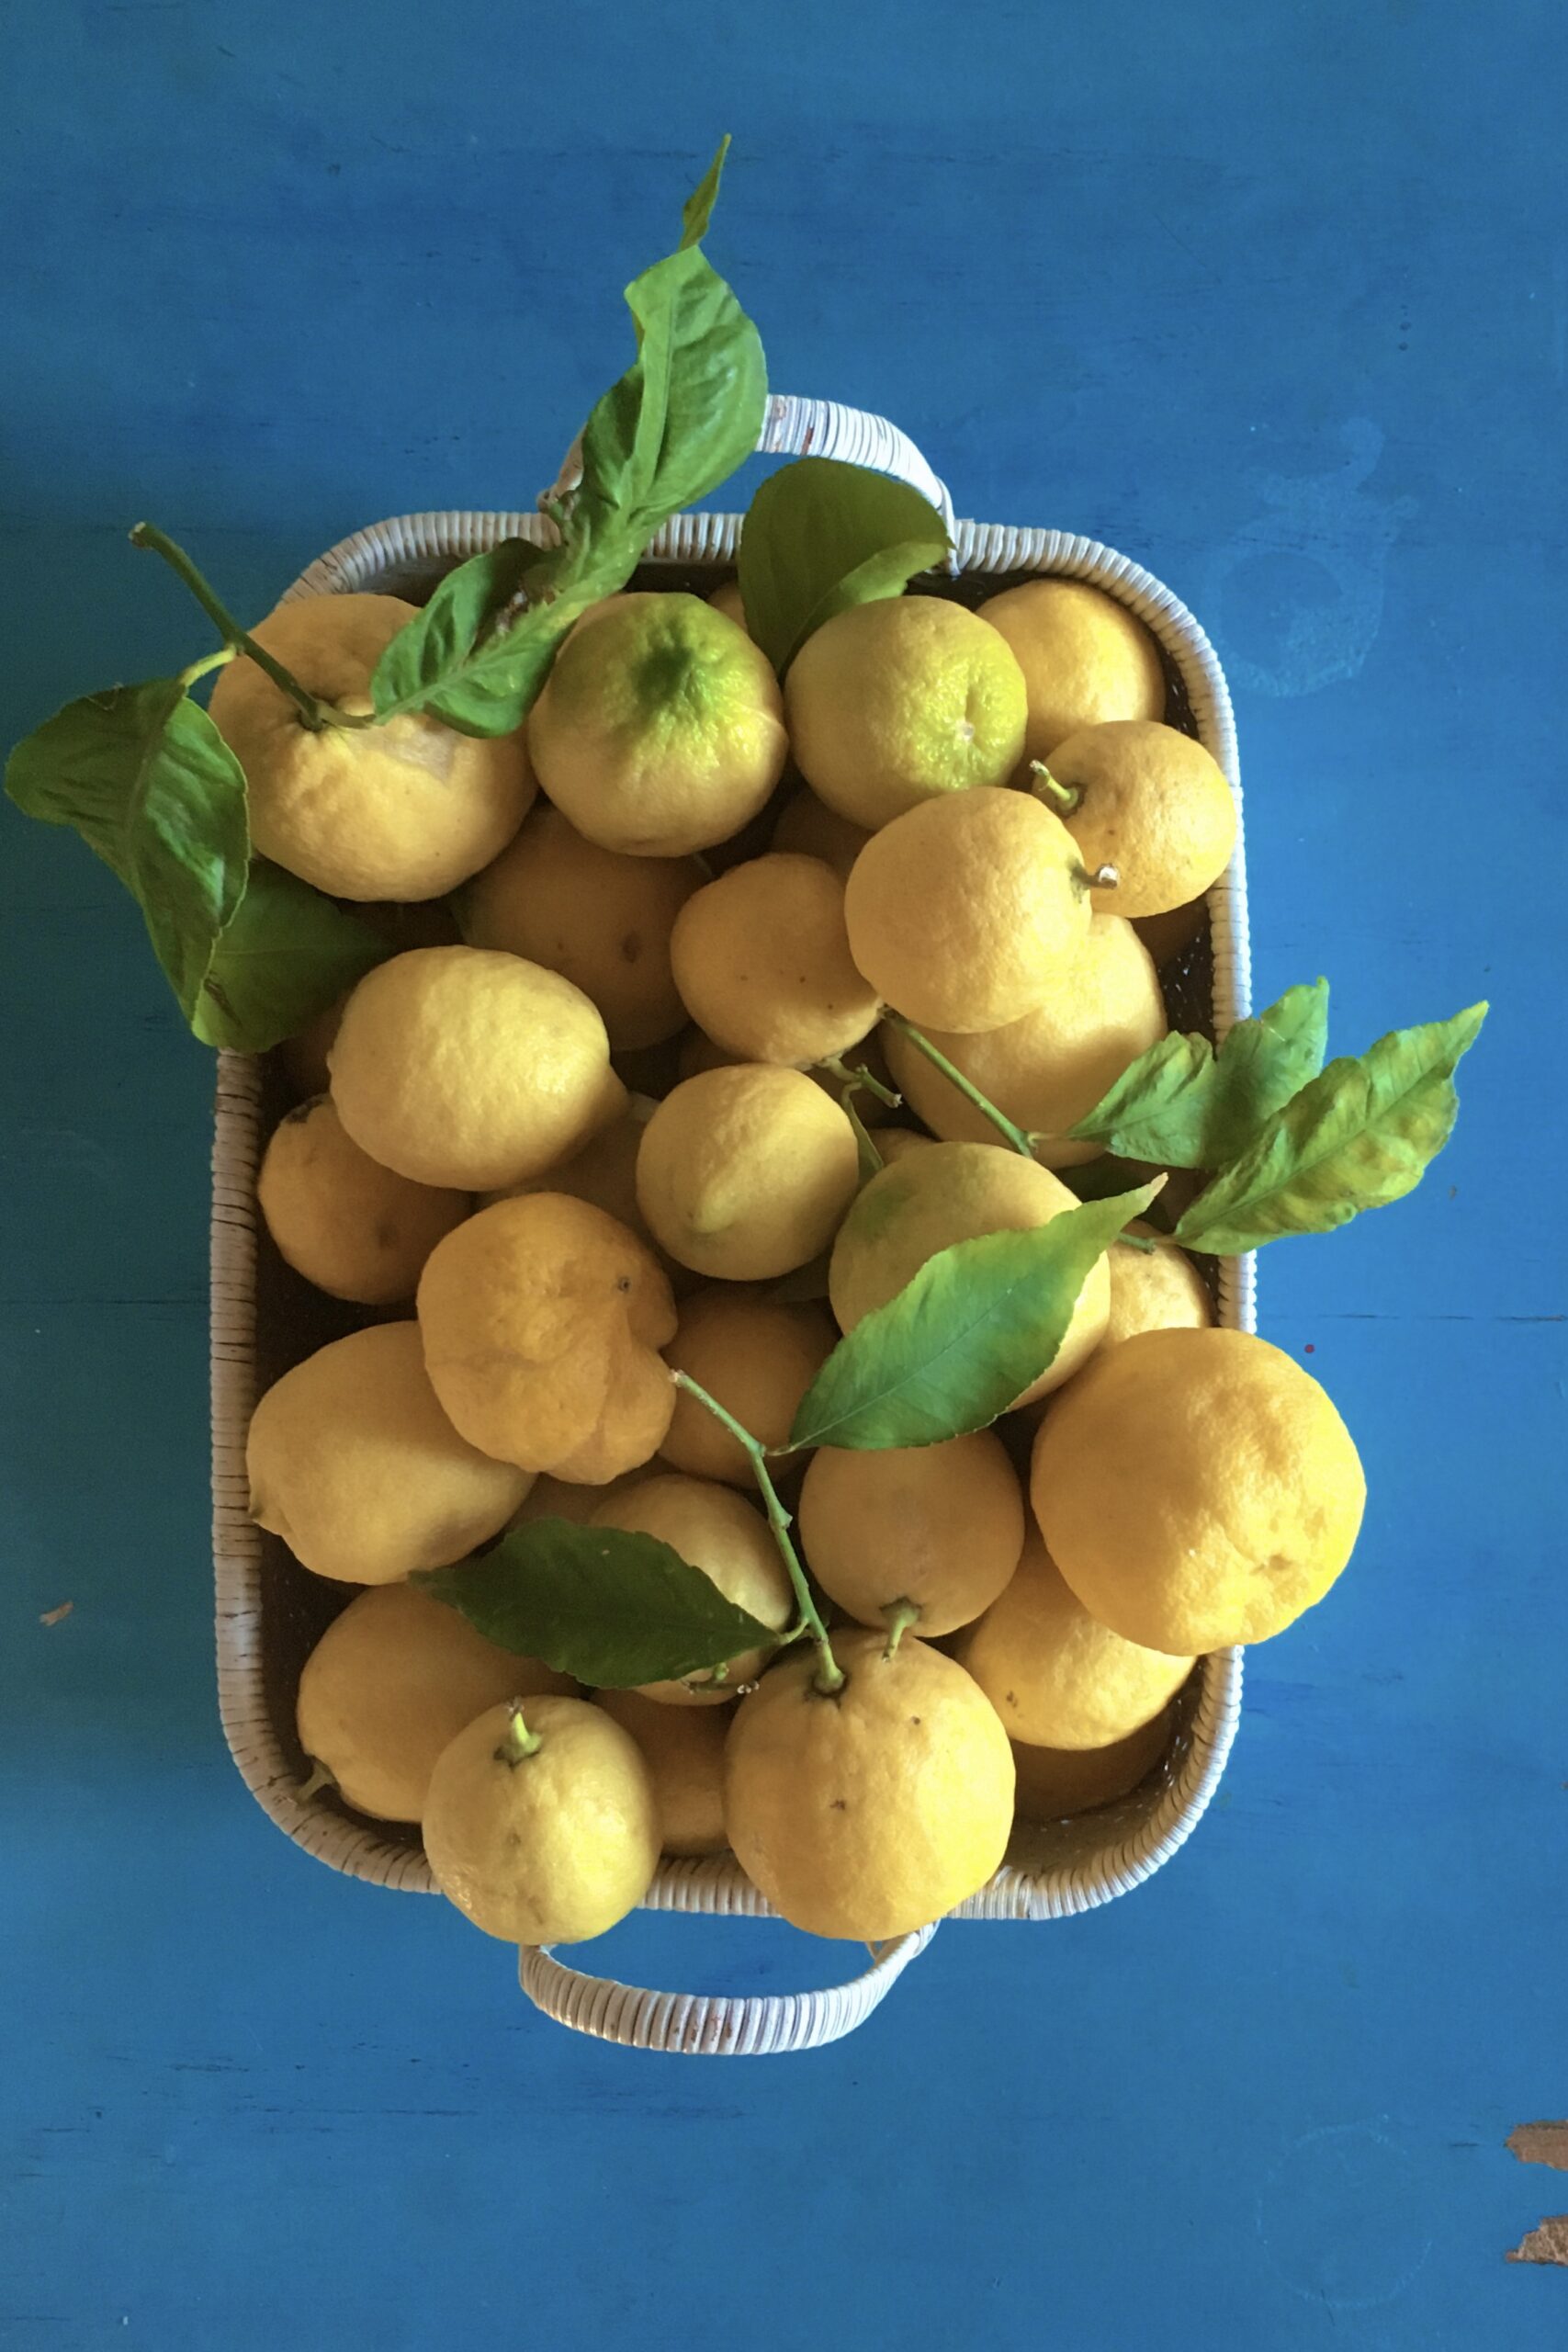 Lemons in a basket on a blue tabletop.